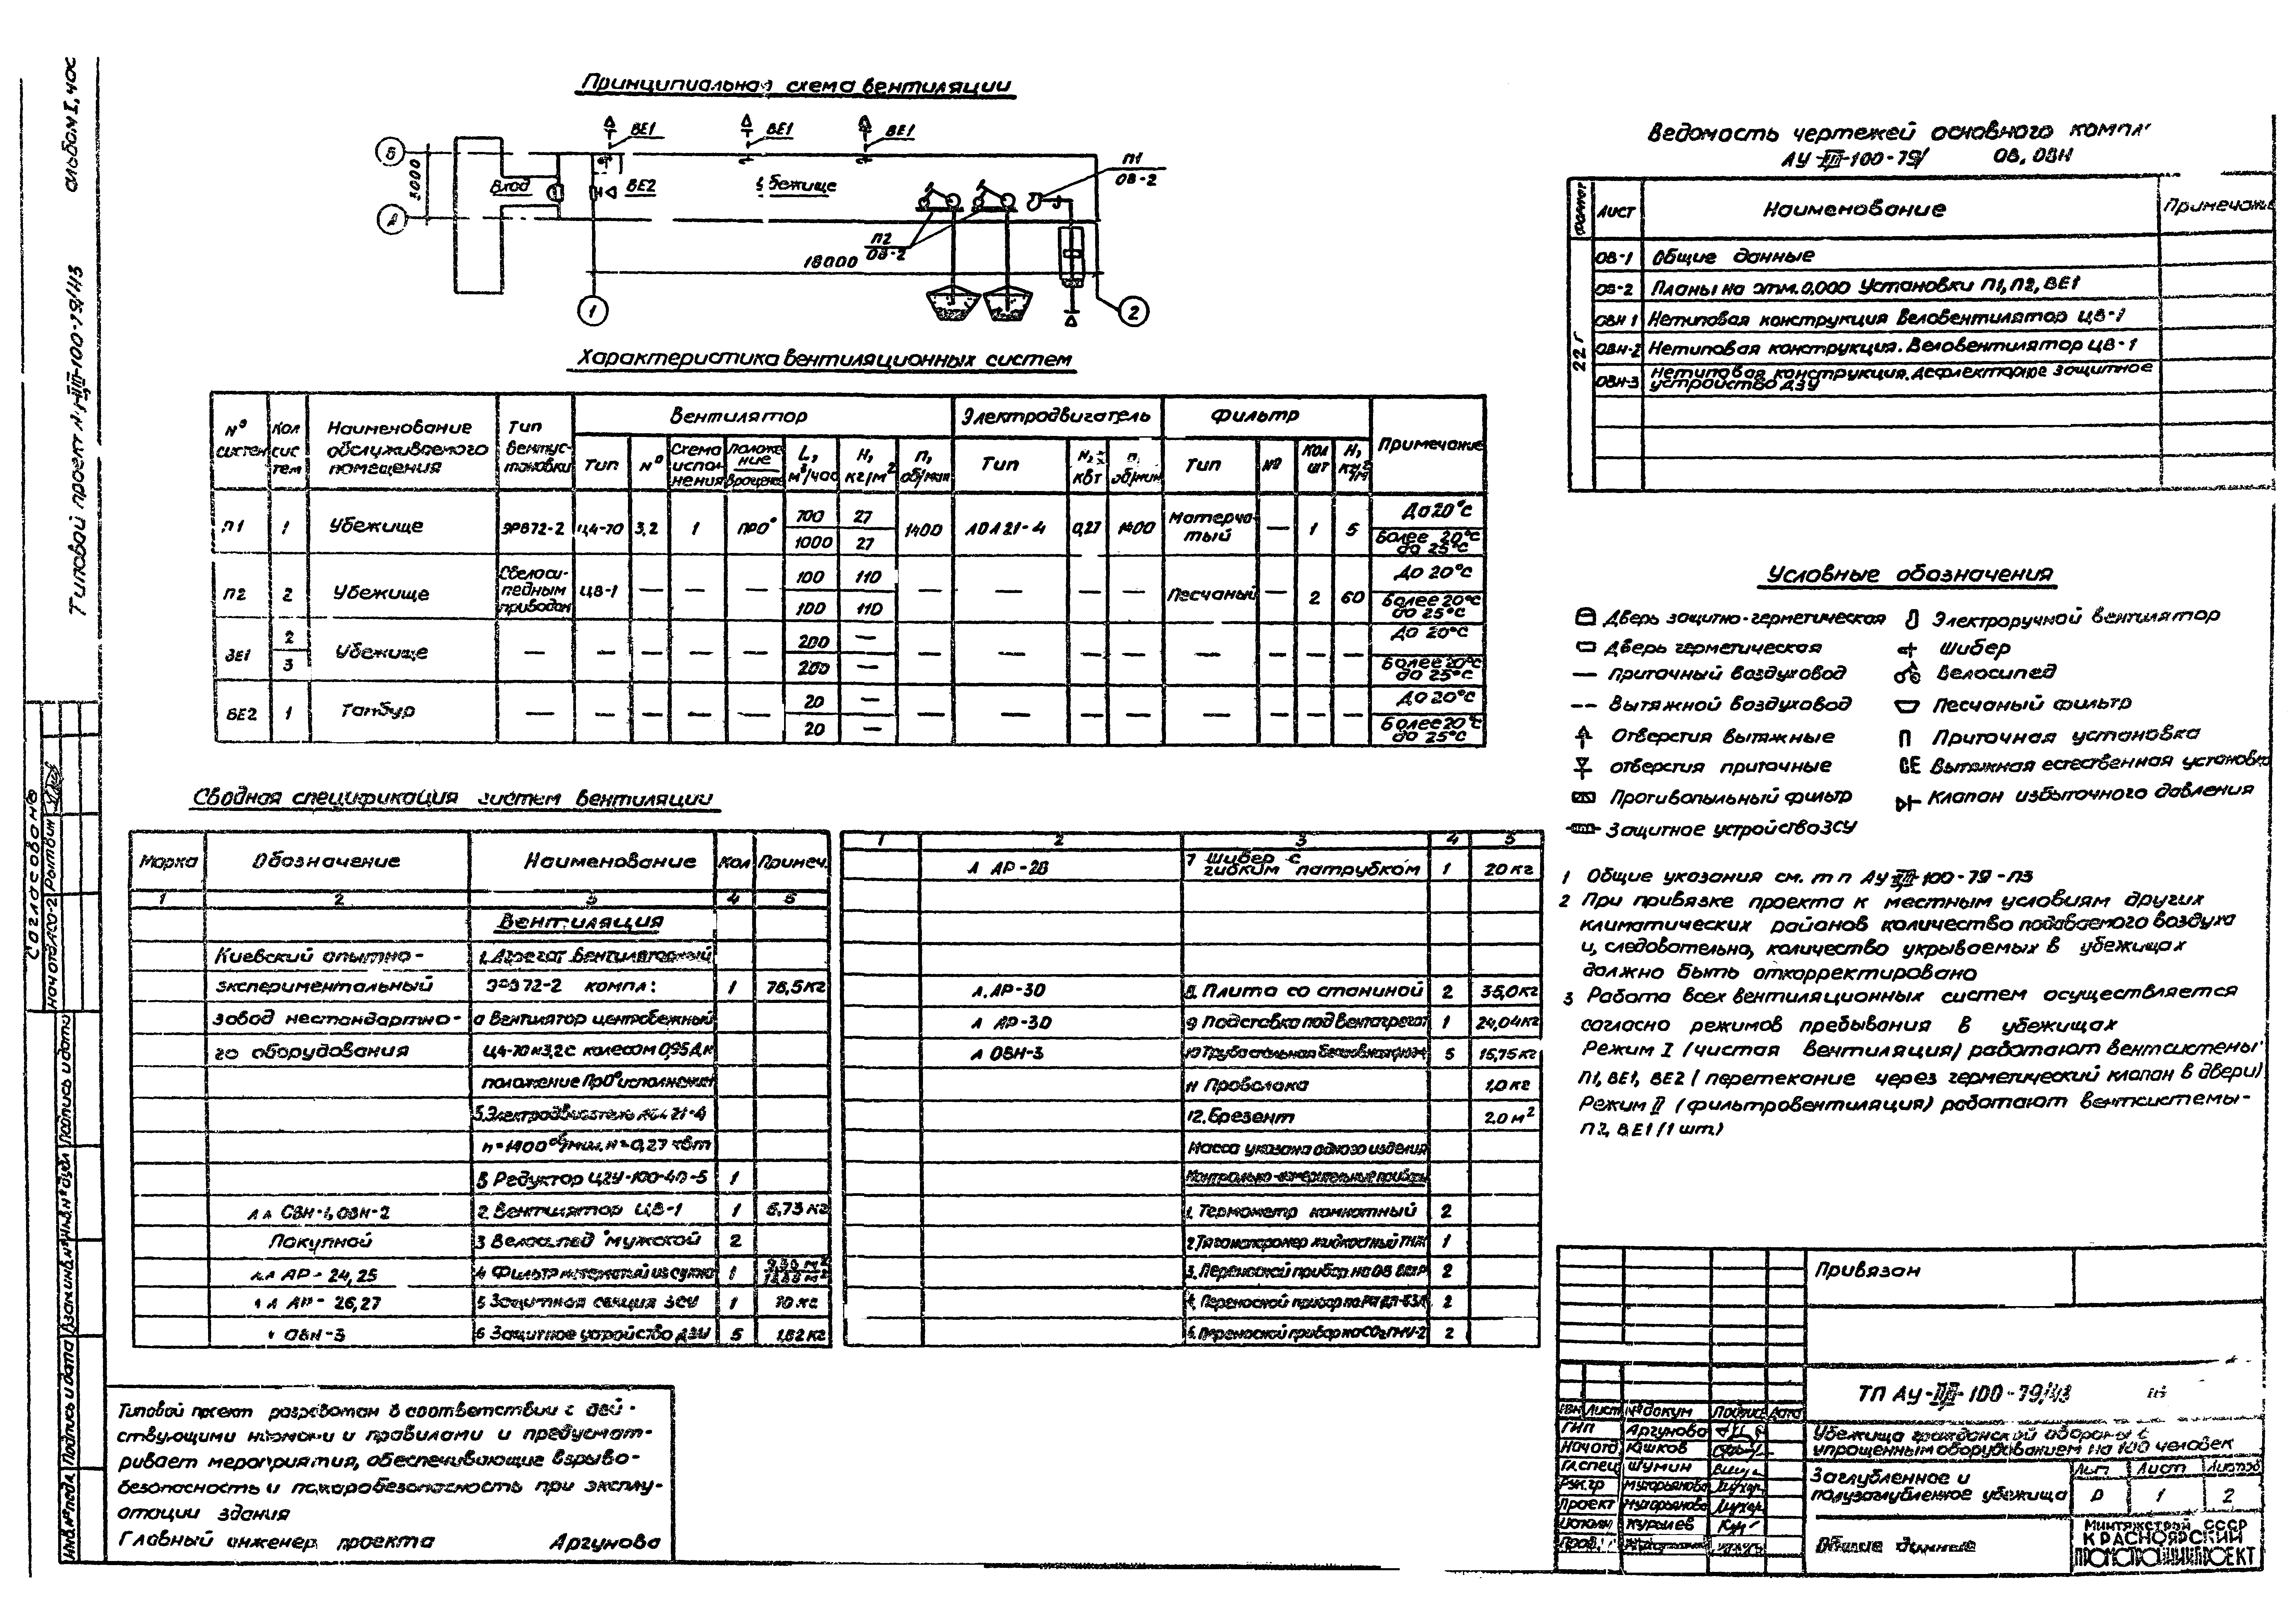 Типовой проект Ау-II,III-100-79/43